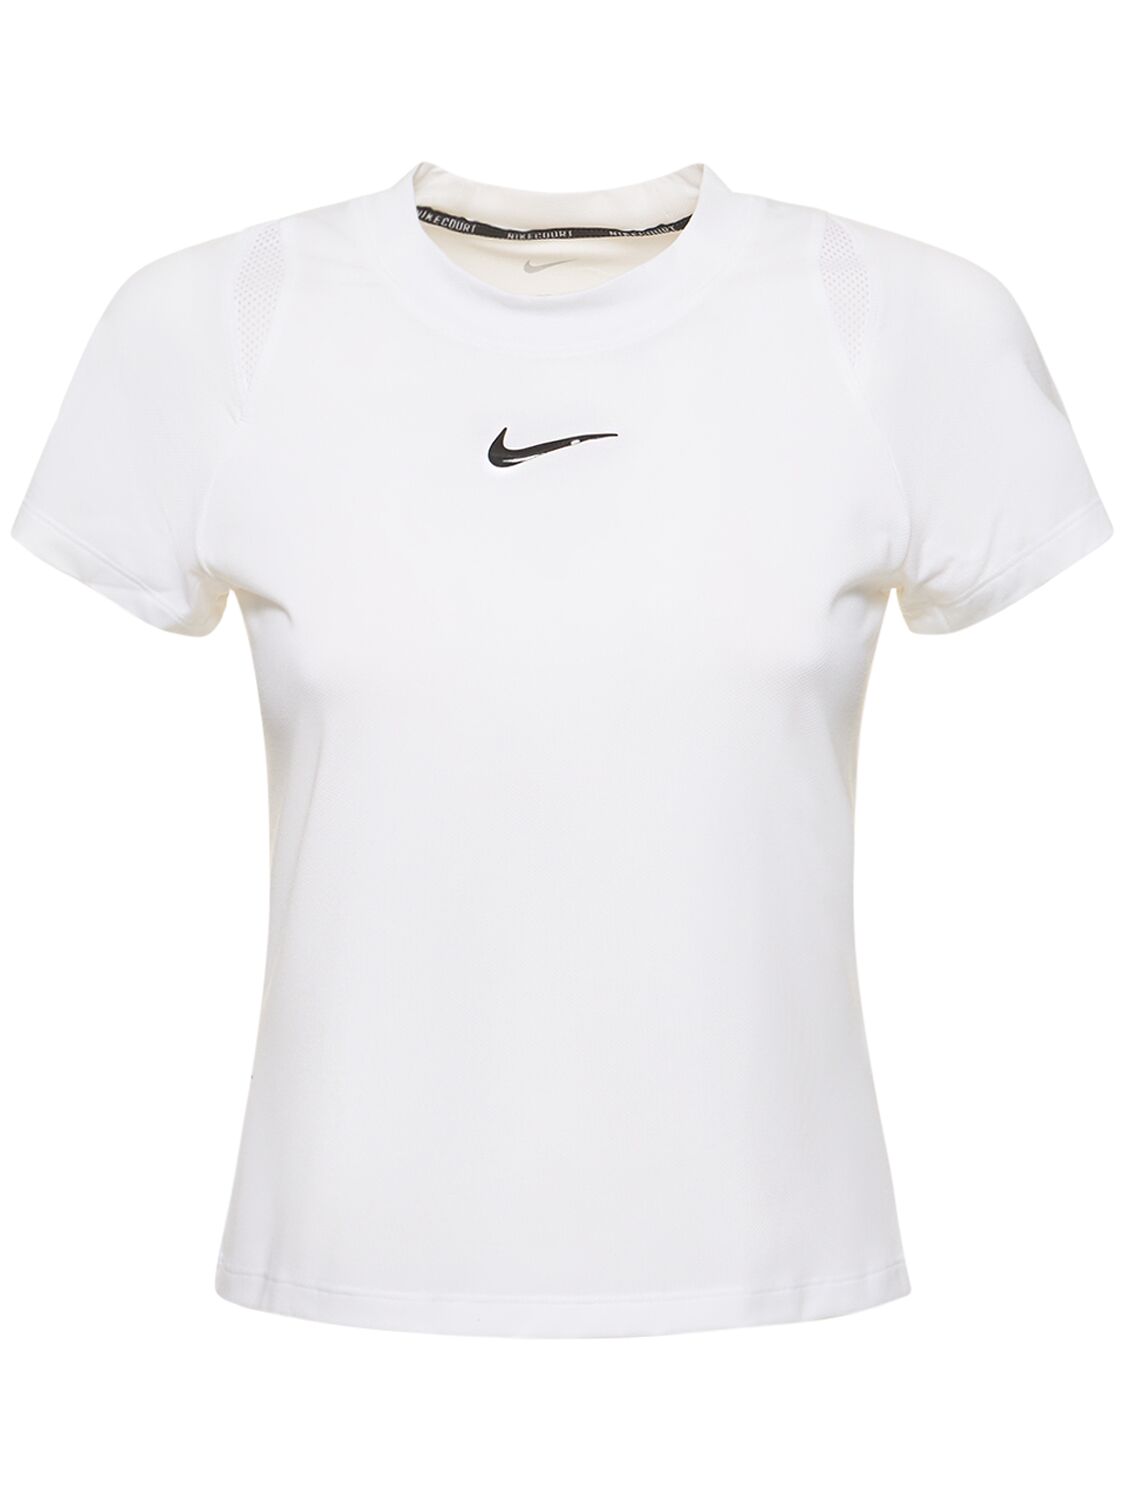 Image of Dri-fit Short Sleeve Tennis Top